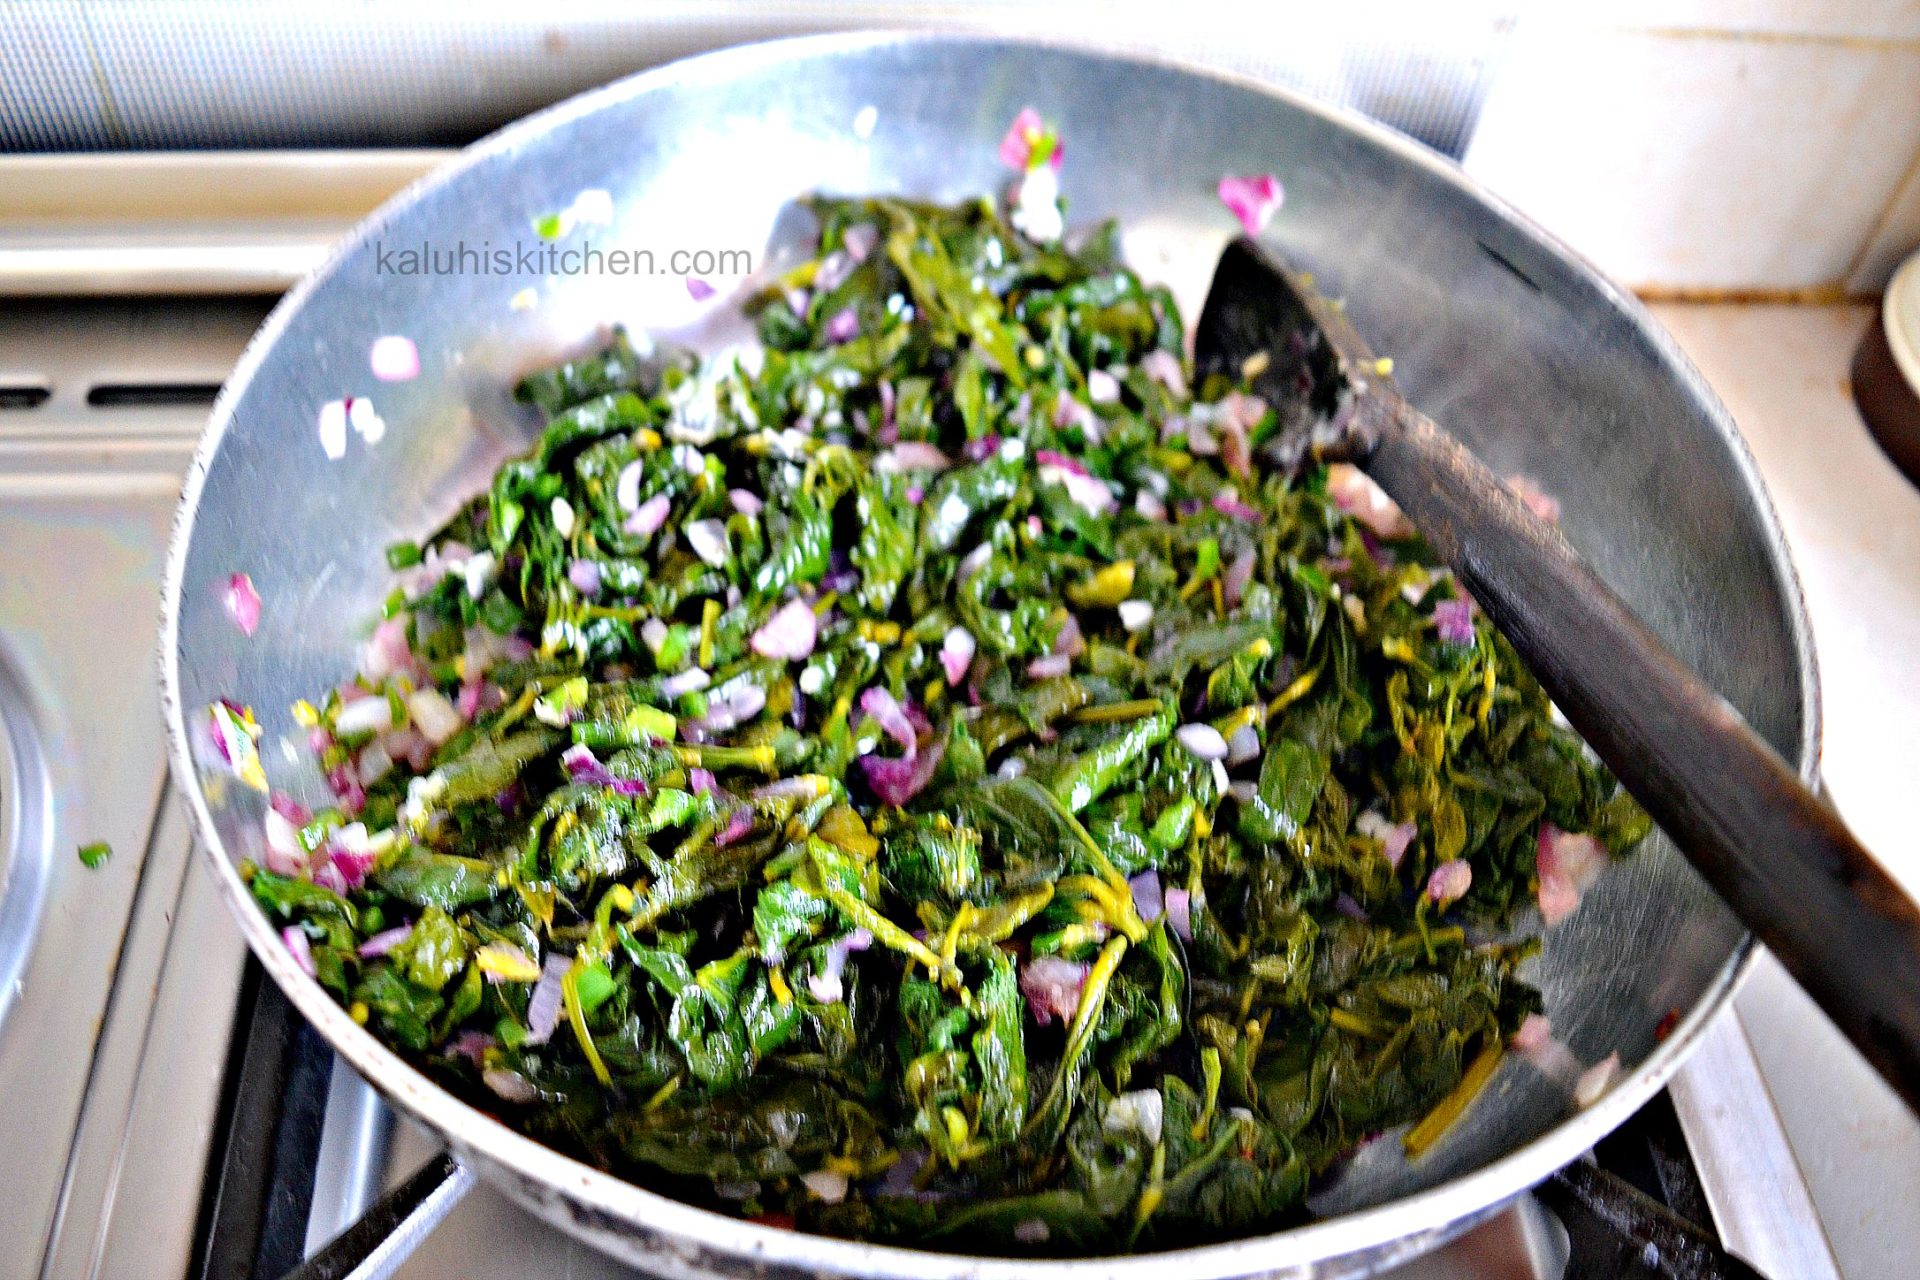 kunde sauteing in red onion and garlic_kenyan food_kunde recipe_kaluhiskitchen.com